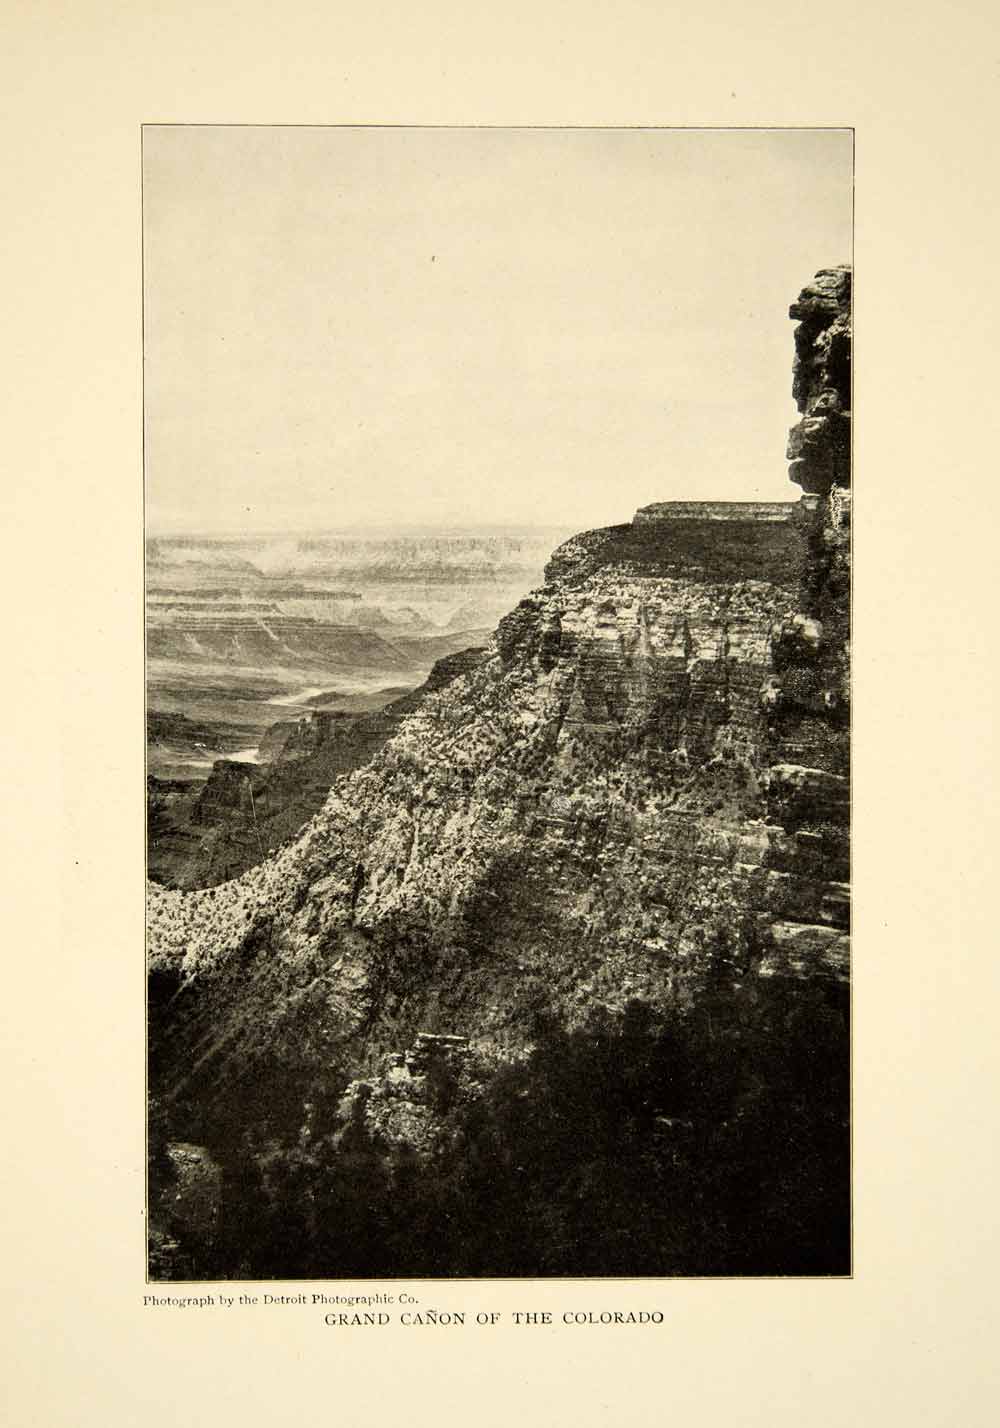 1903 Print Colorado River Grand Canyon Landscape Historical Image View XGFD2